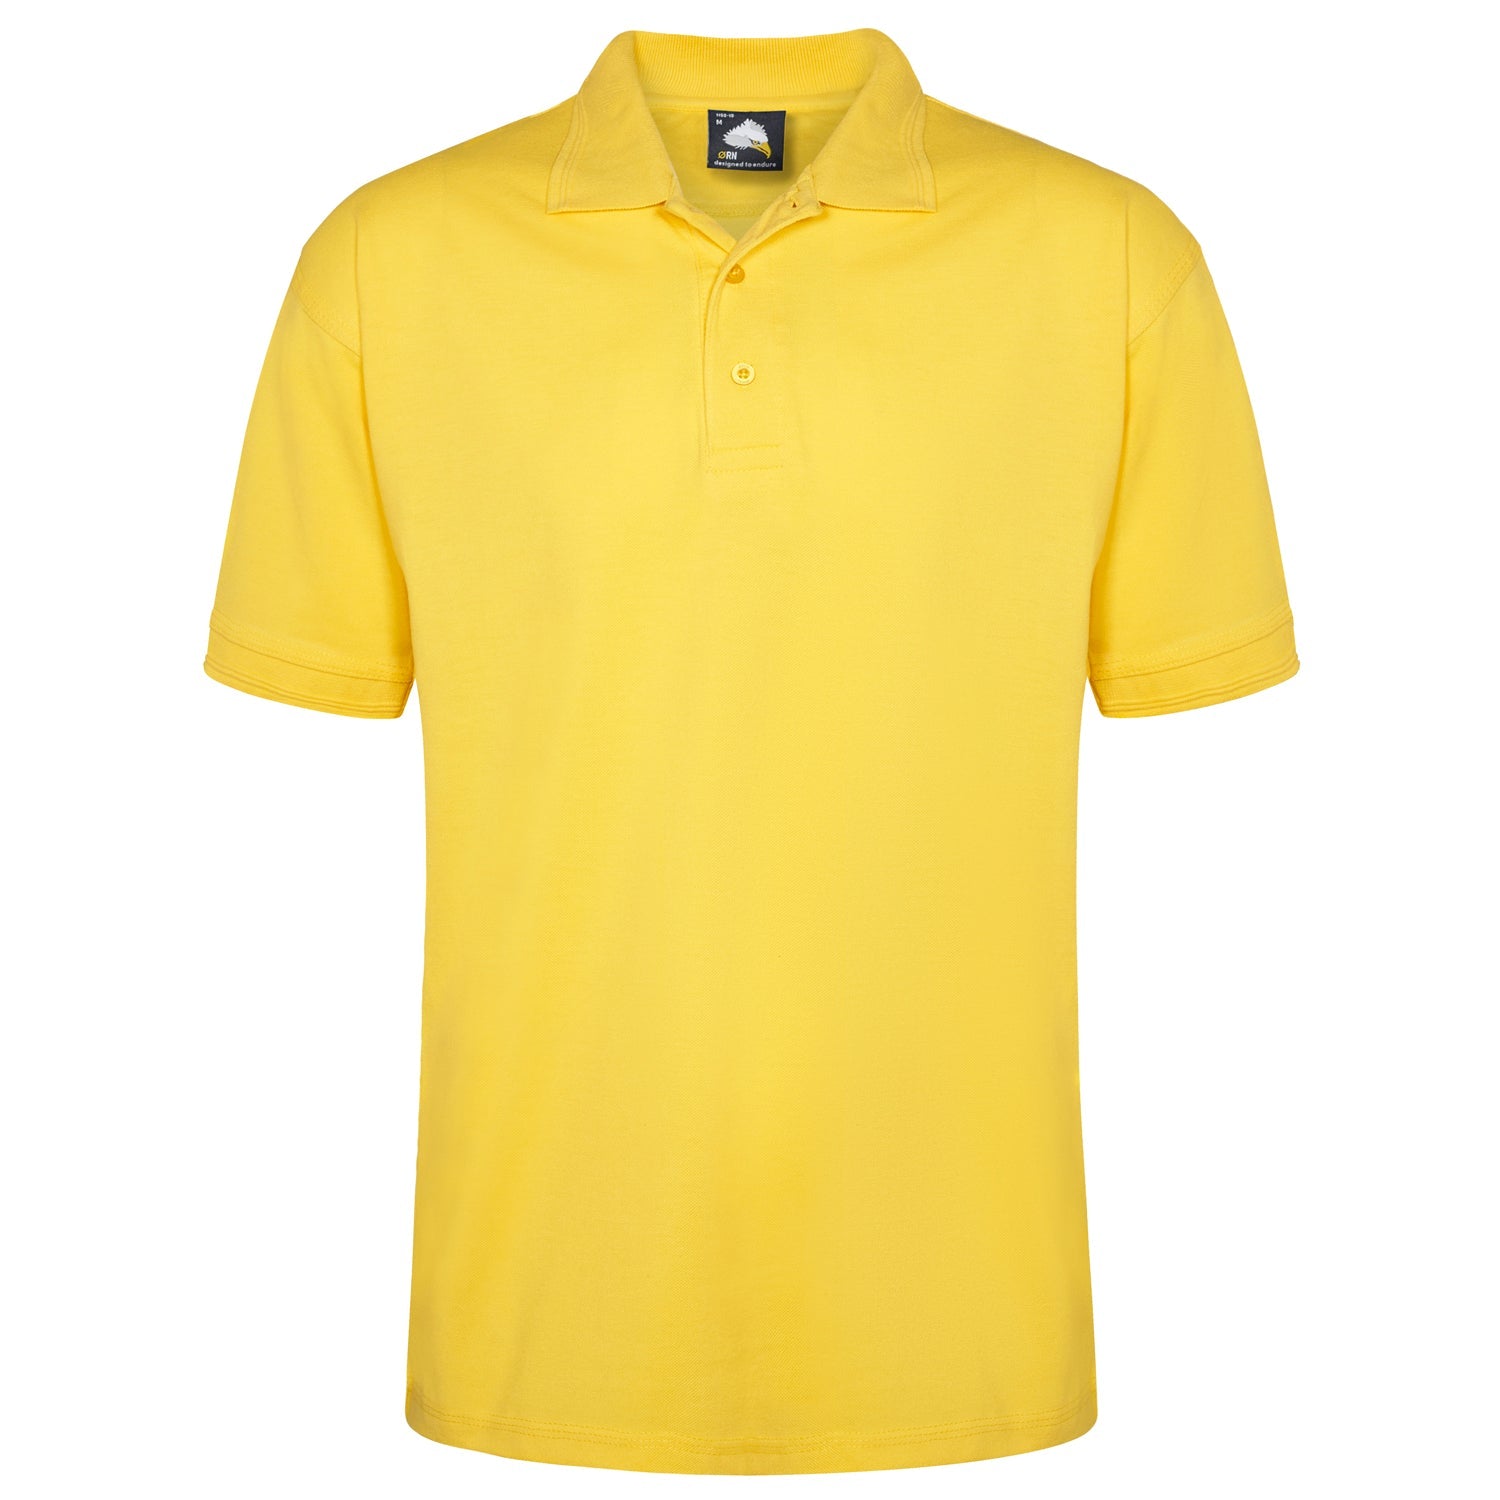 ORN Eagle Poloshirt - Yellow